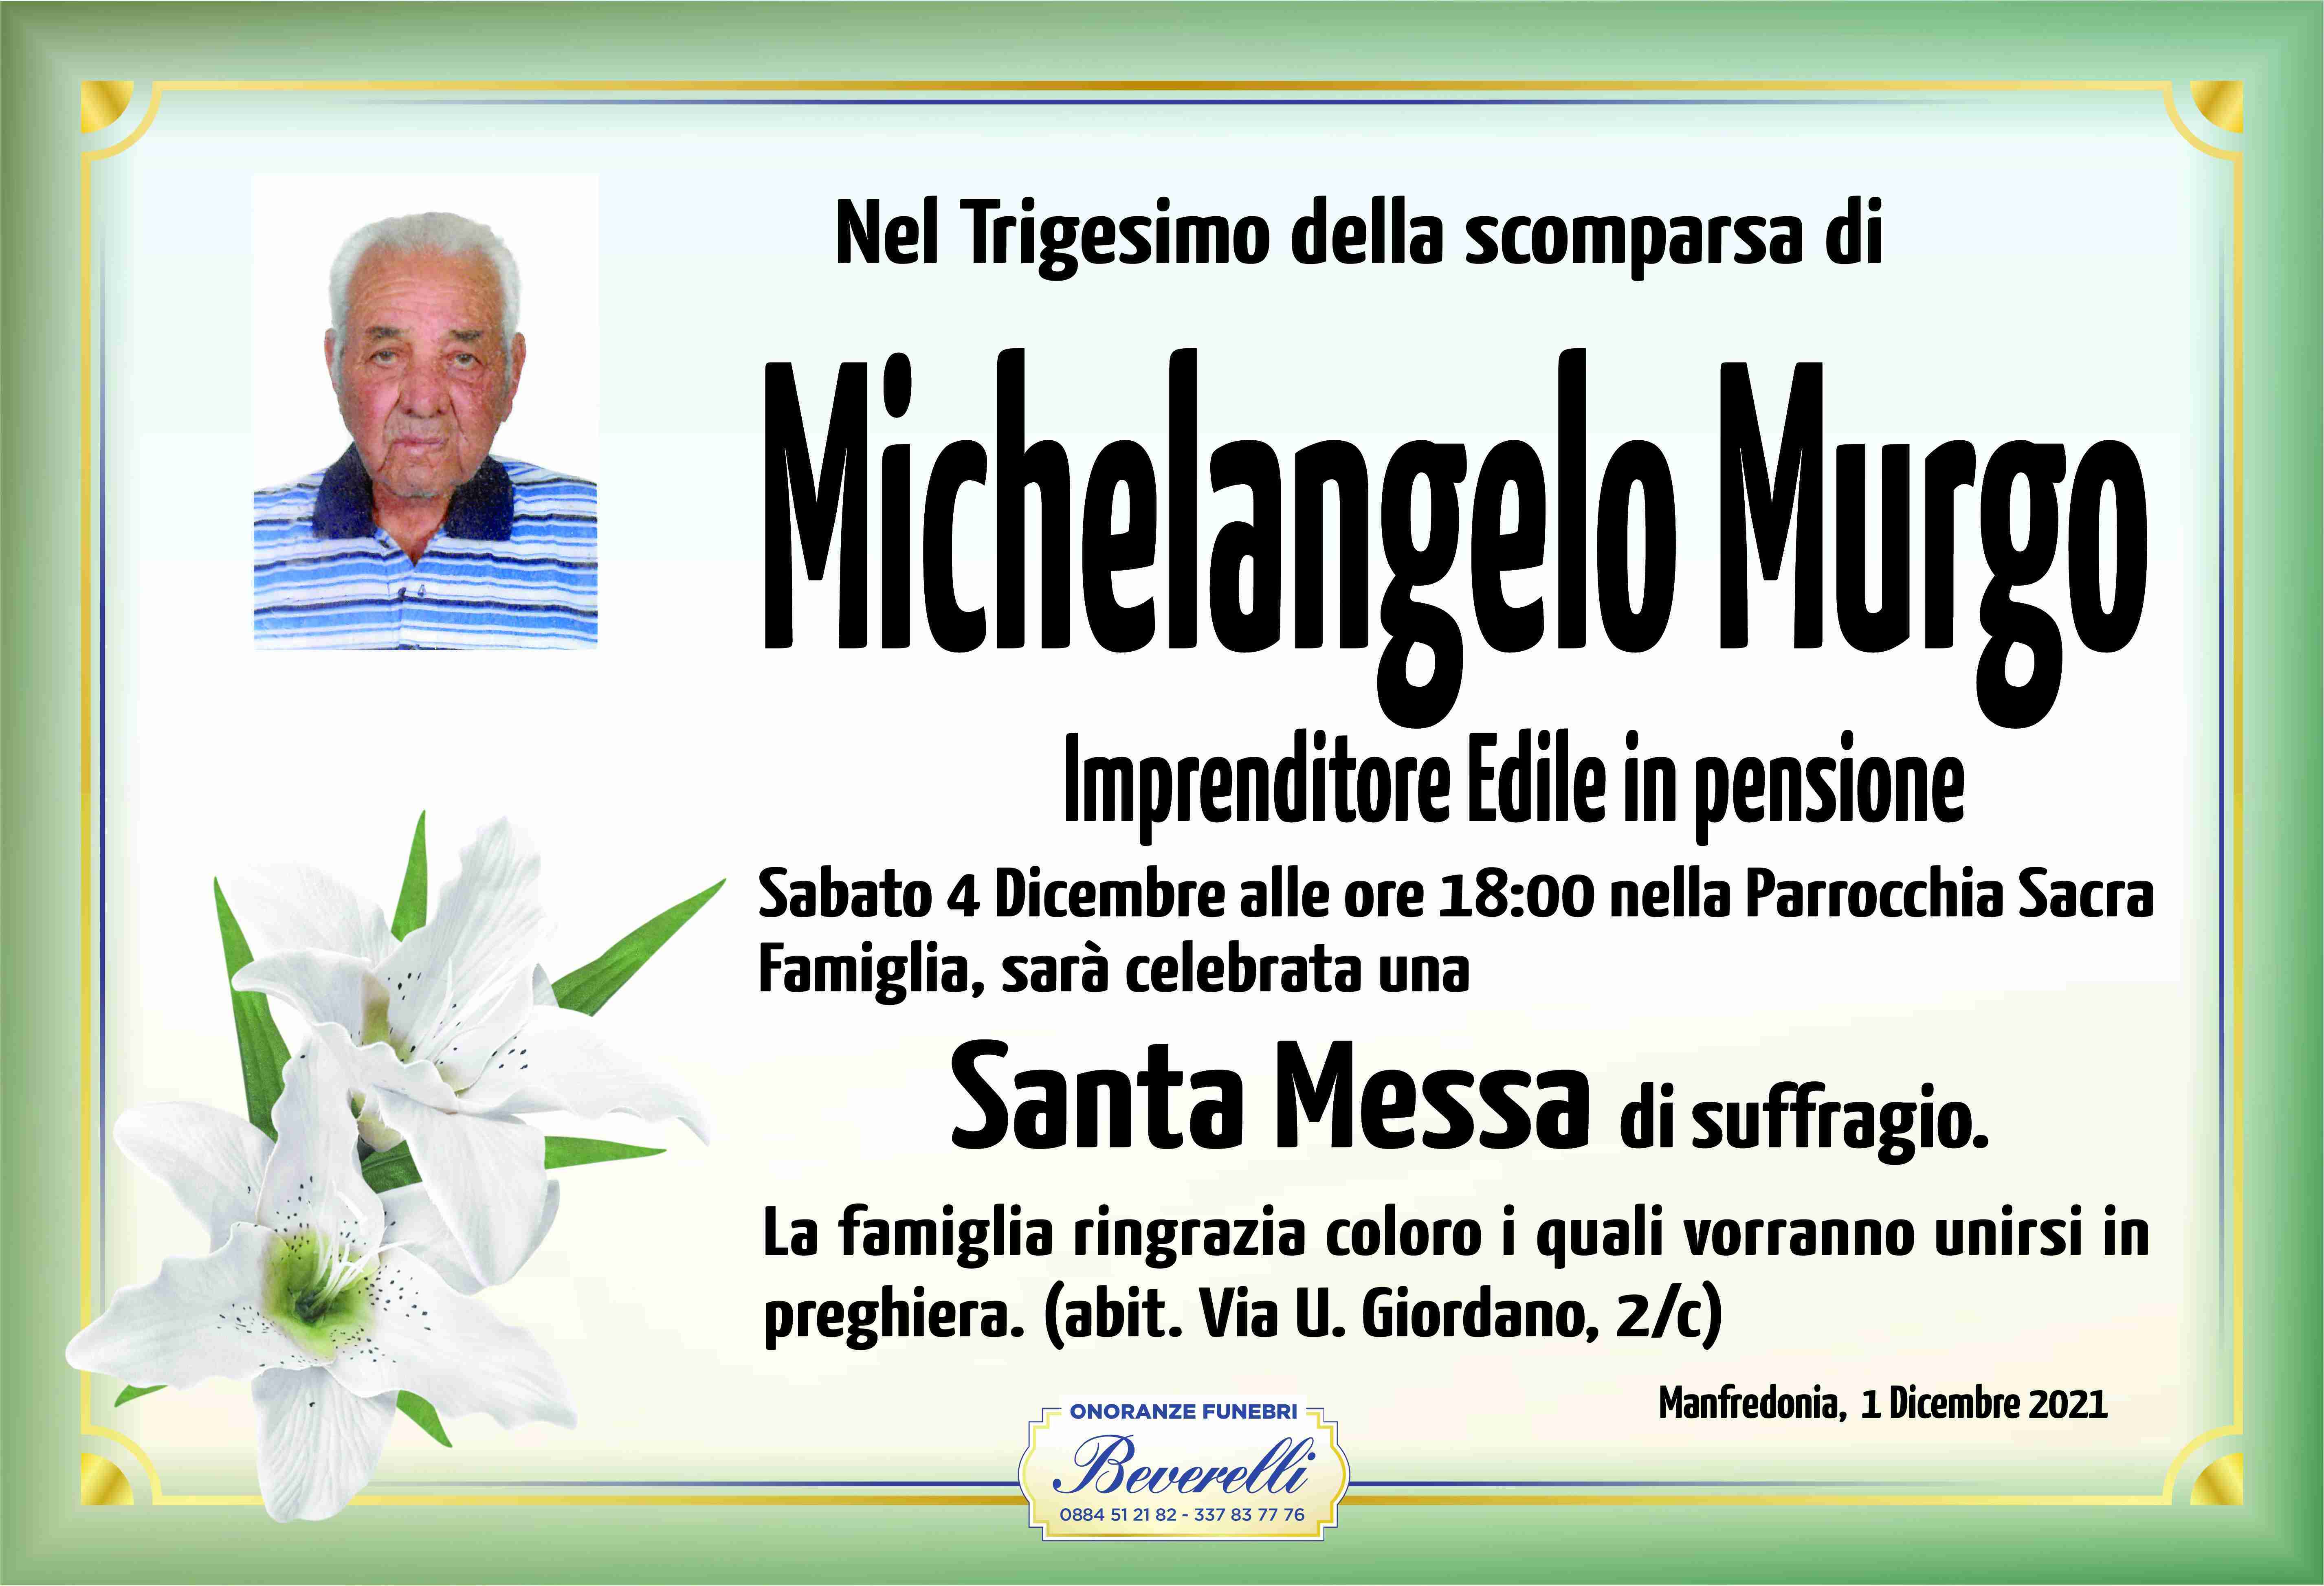 Michelangelo Murgo